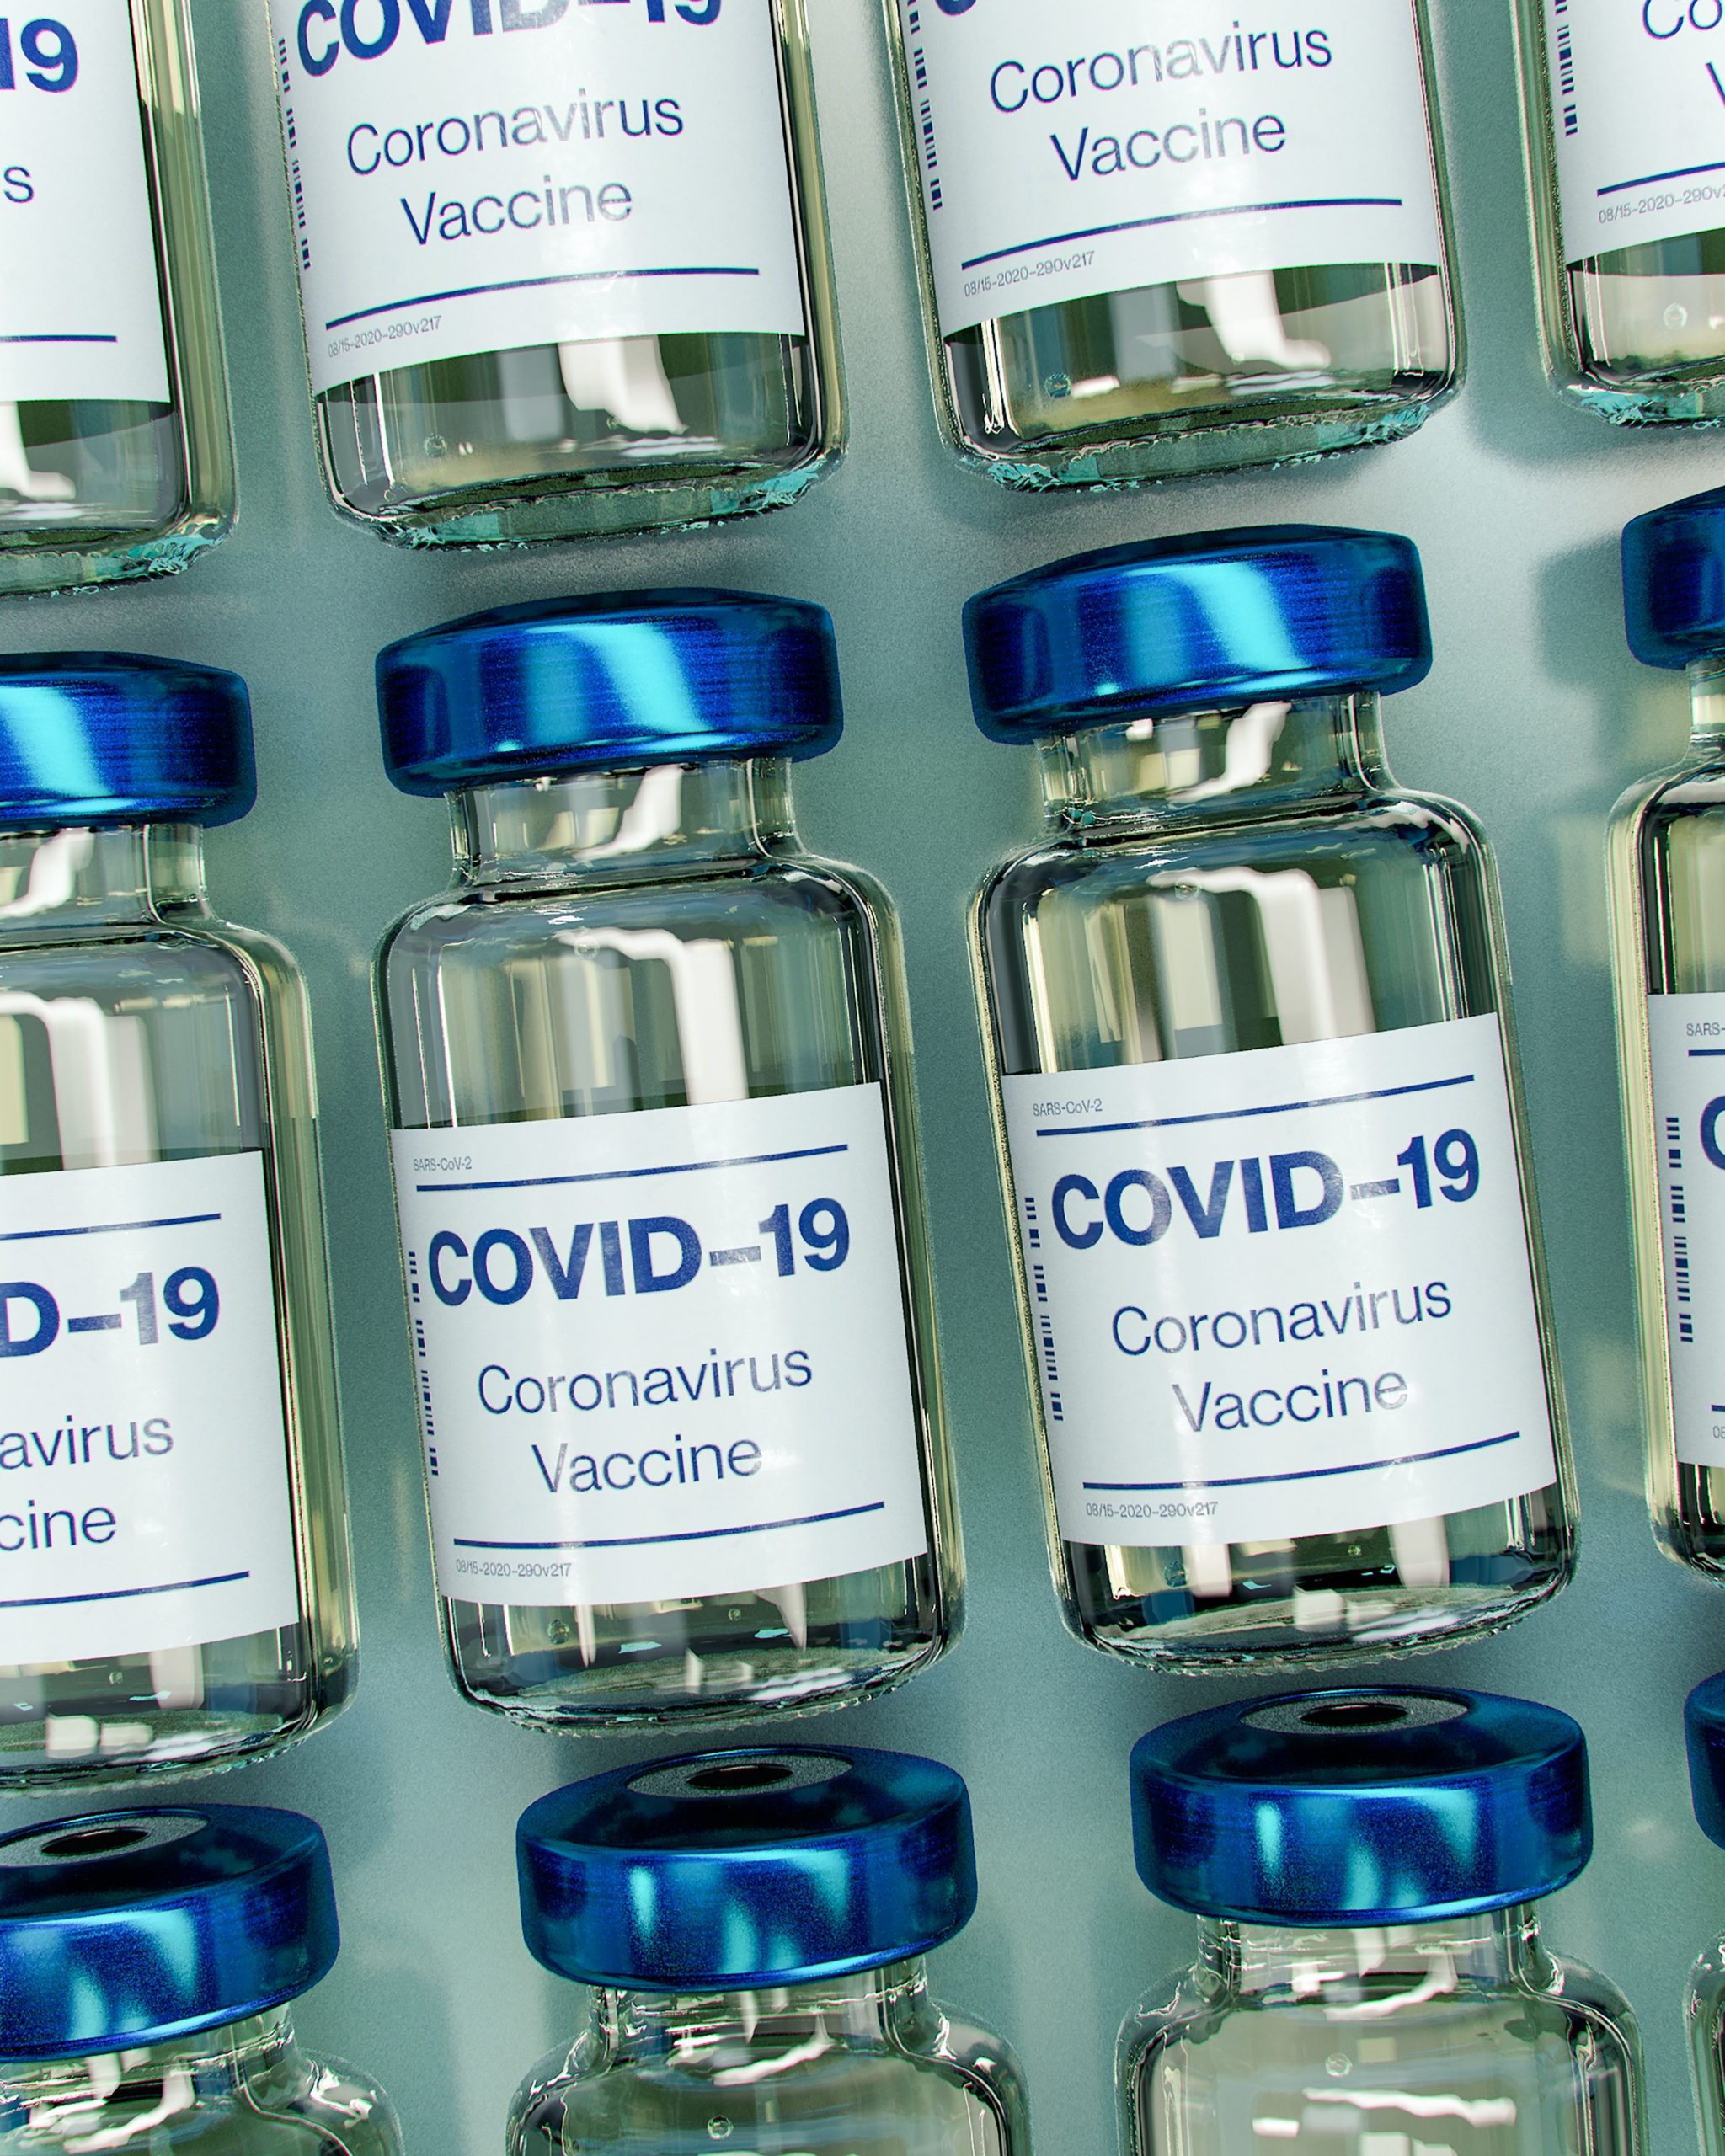 Gates Foundation donates $250 million to fight COVID-19 pandemic